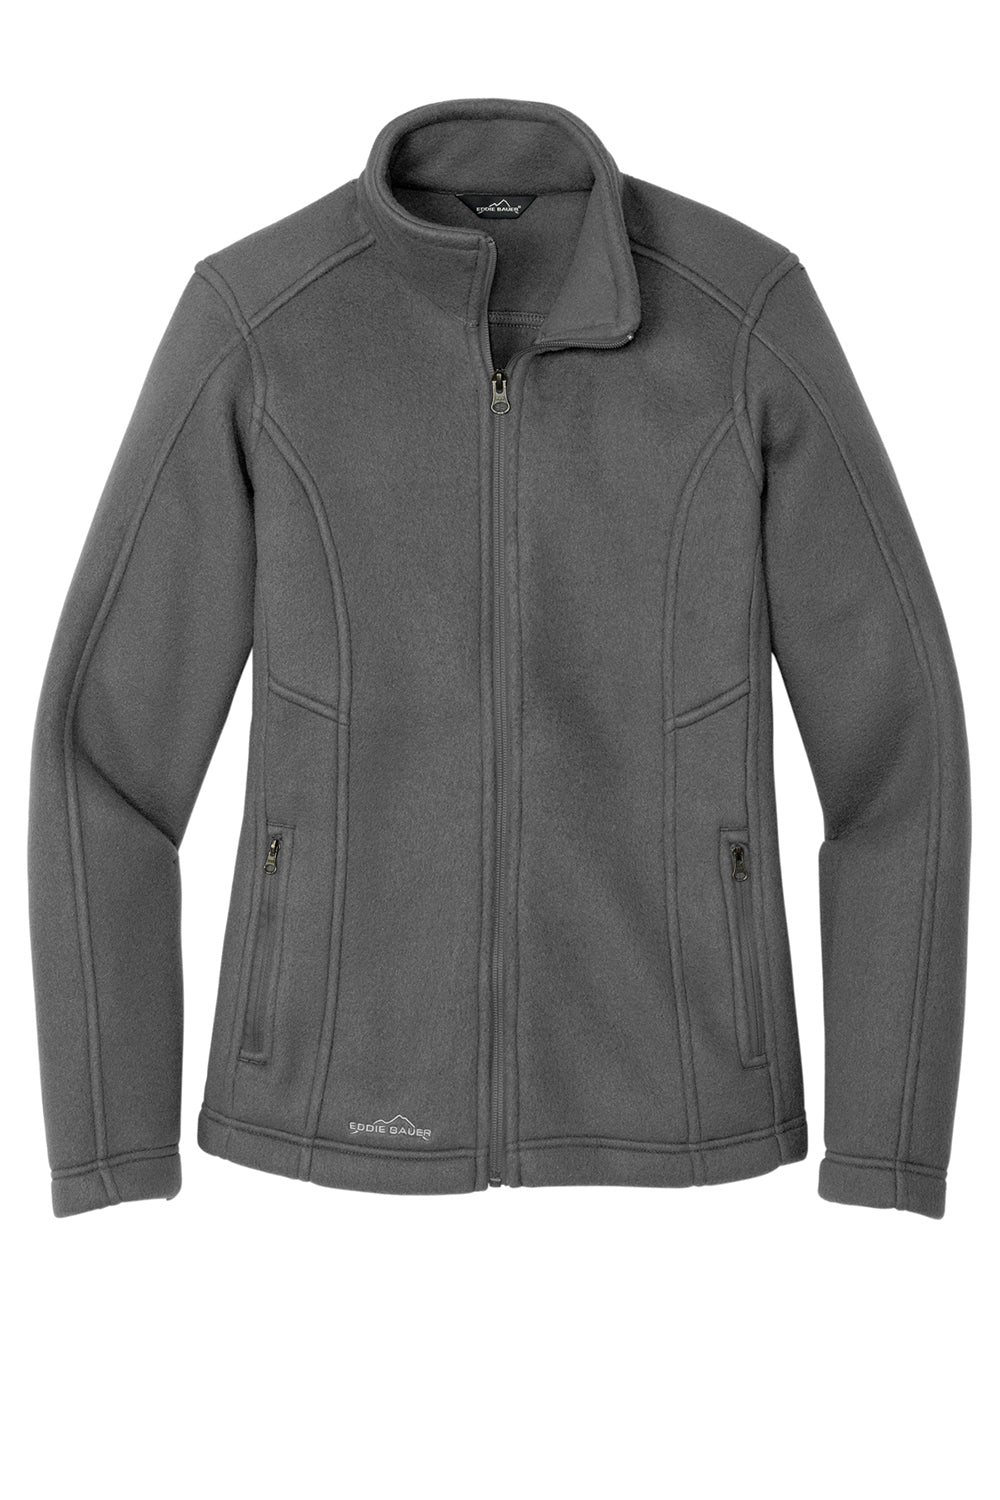 Eddie Bauer EB201 Womens Full Zip Fleece Jacket Steel Grey Flat Front